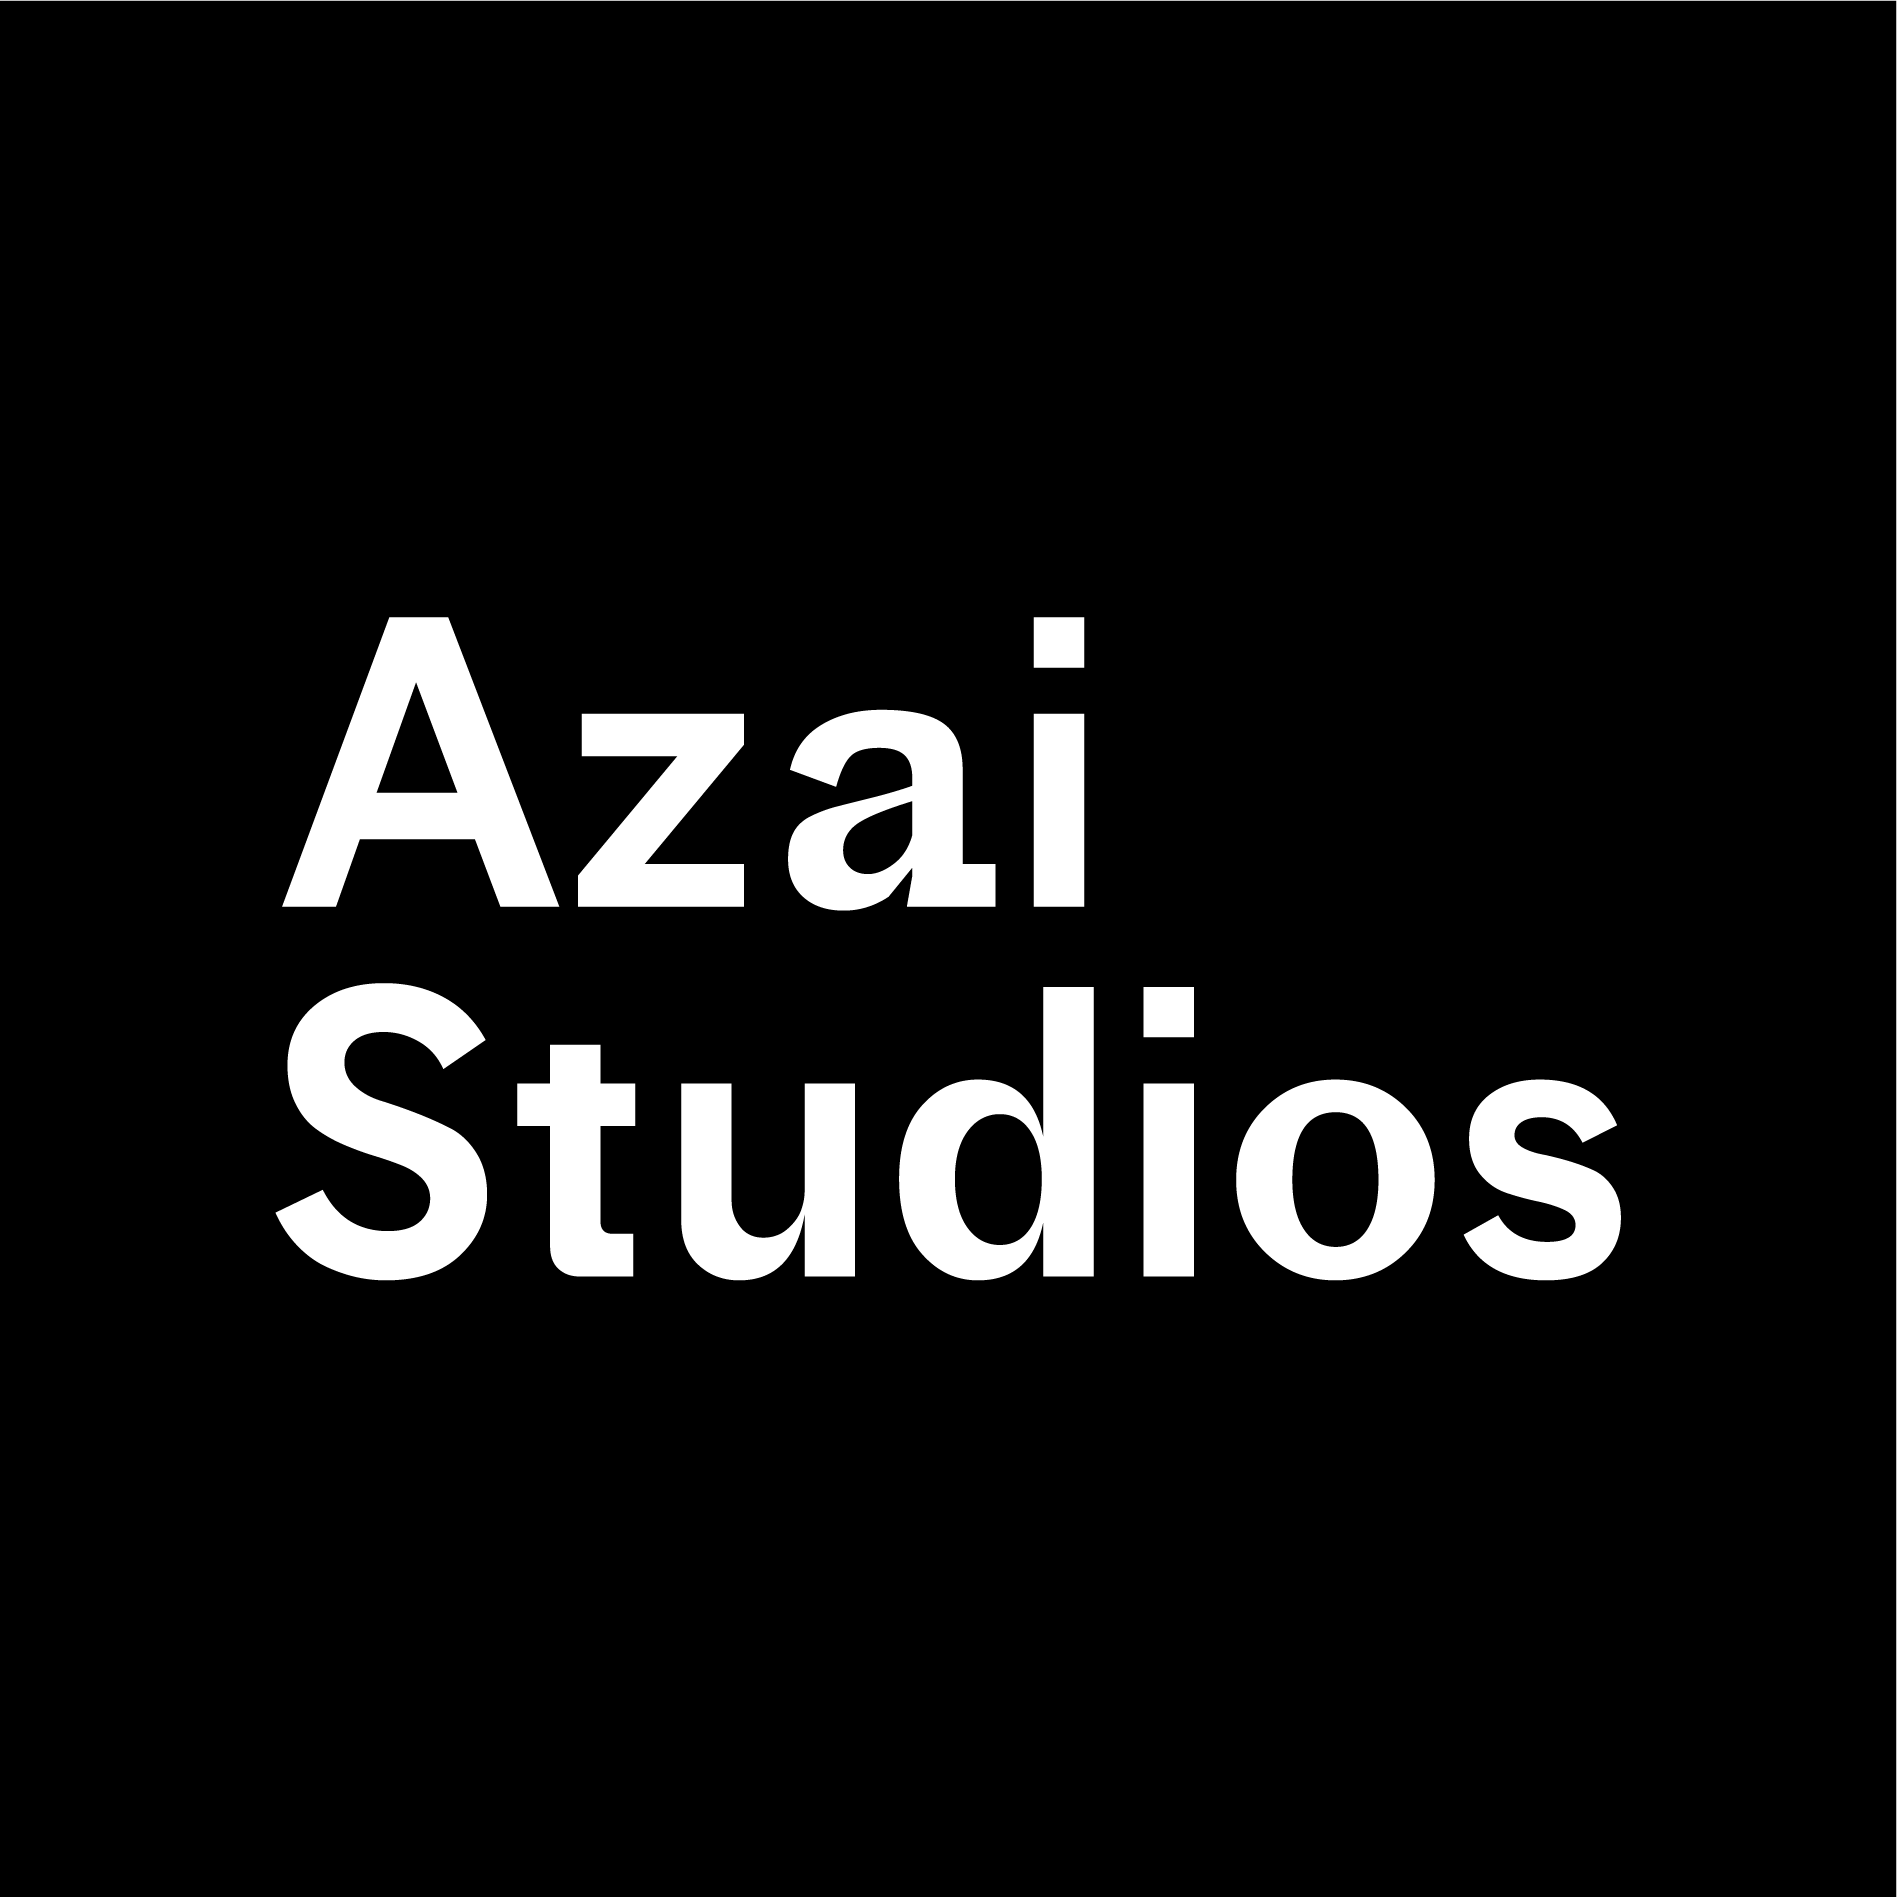 Azai Studios profile on Qualified.One